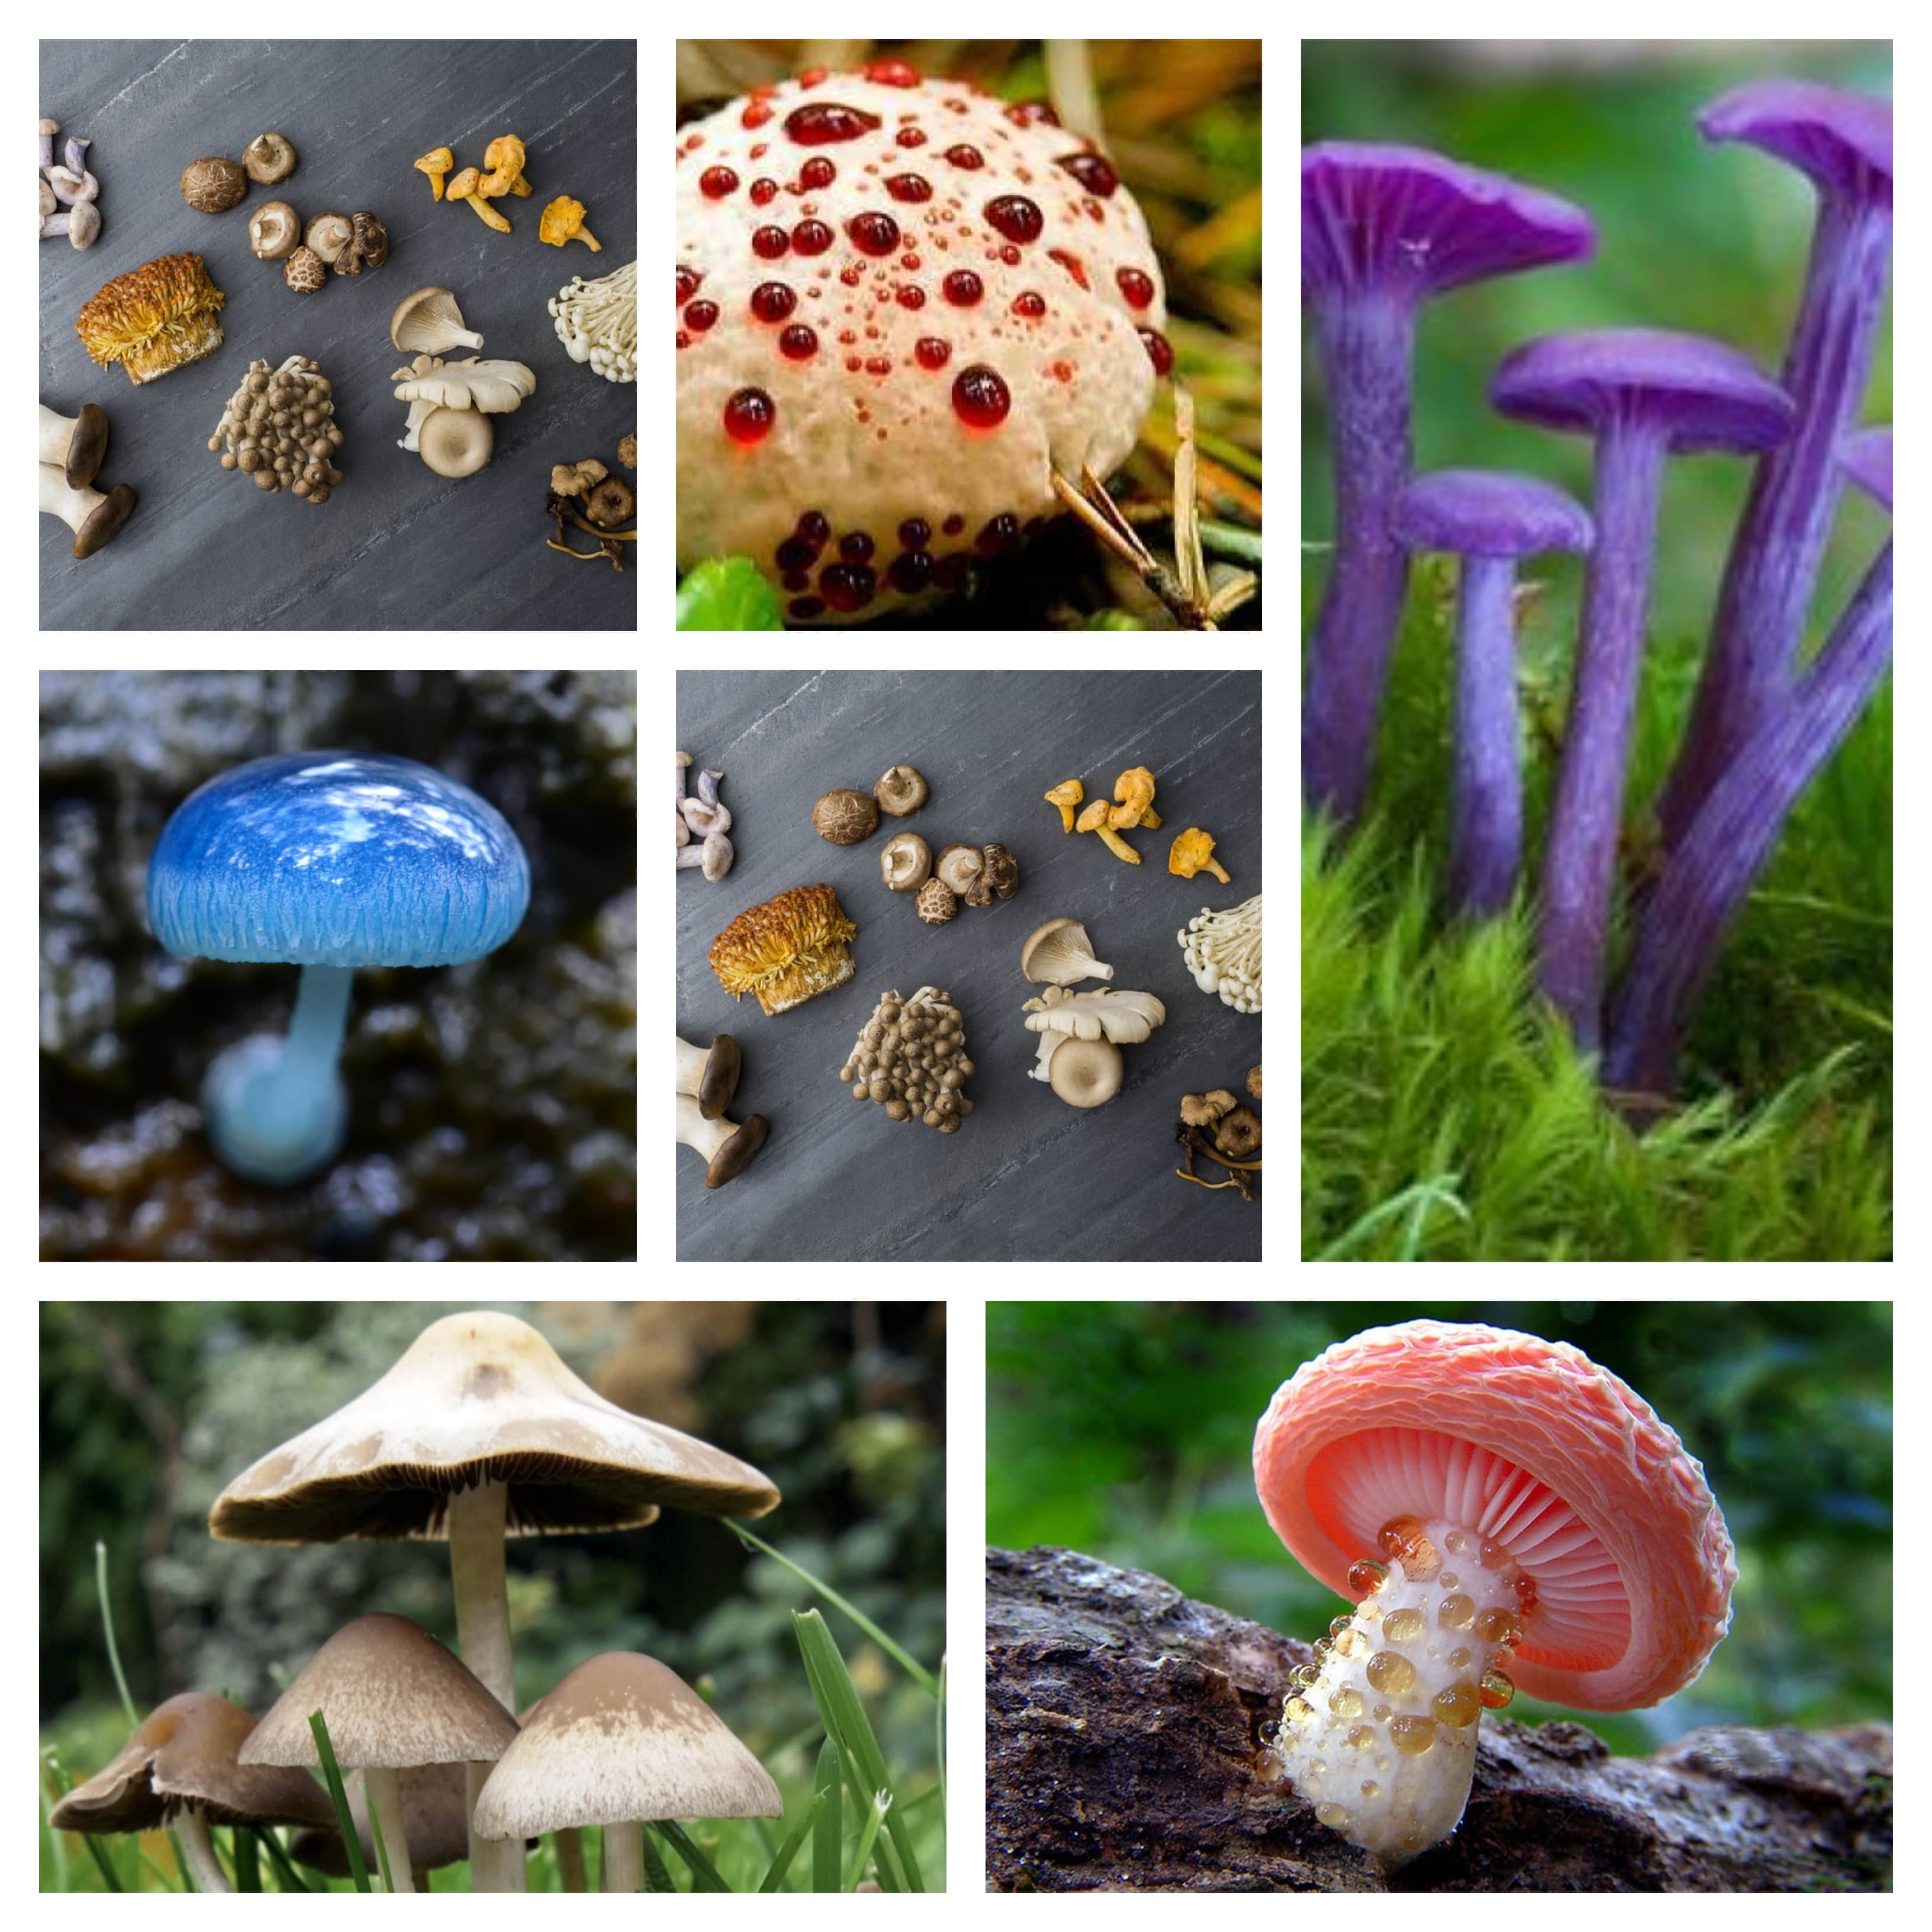 types of fungi species